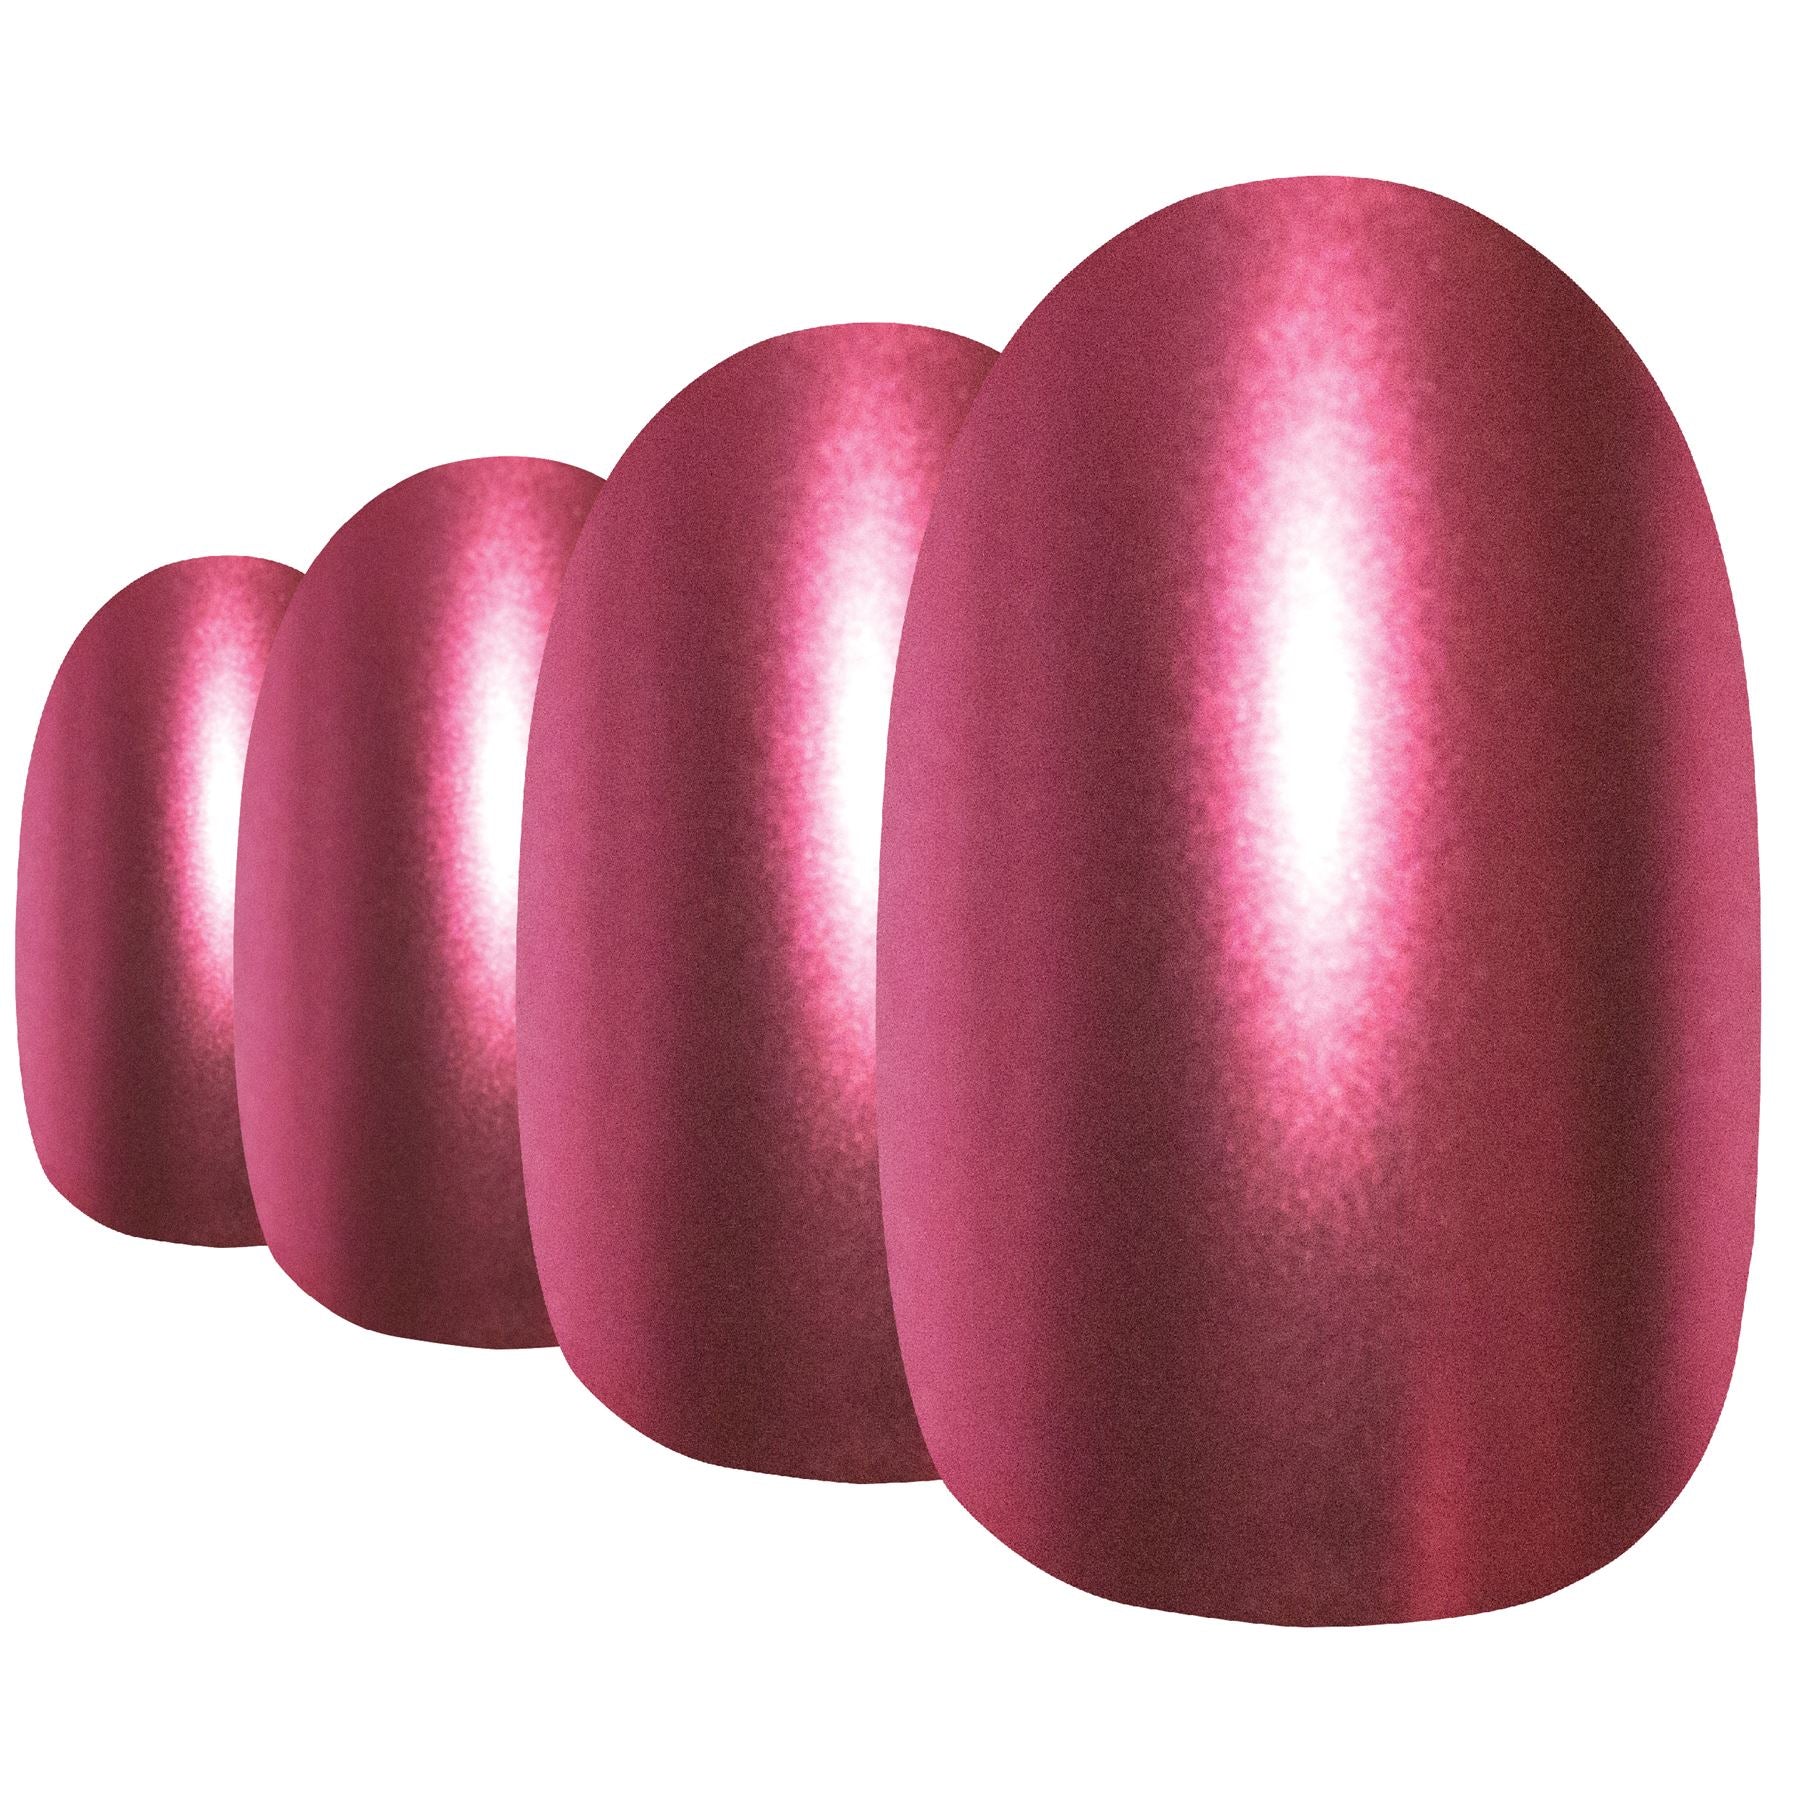 False Nails by Bling Art Red Matte Metallic Oval Medium Fake Acrylic Tips Glue